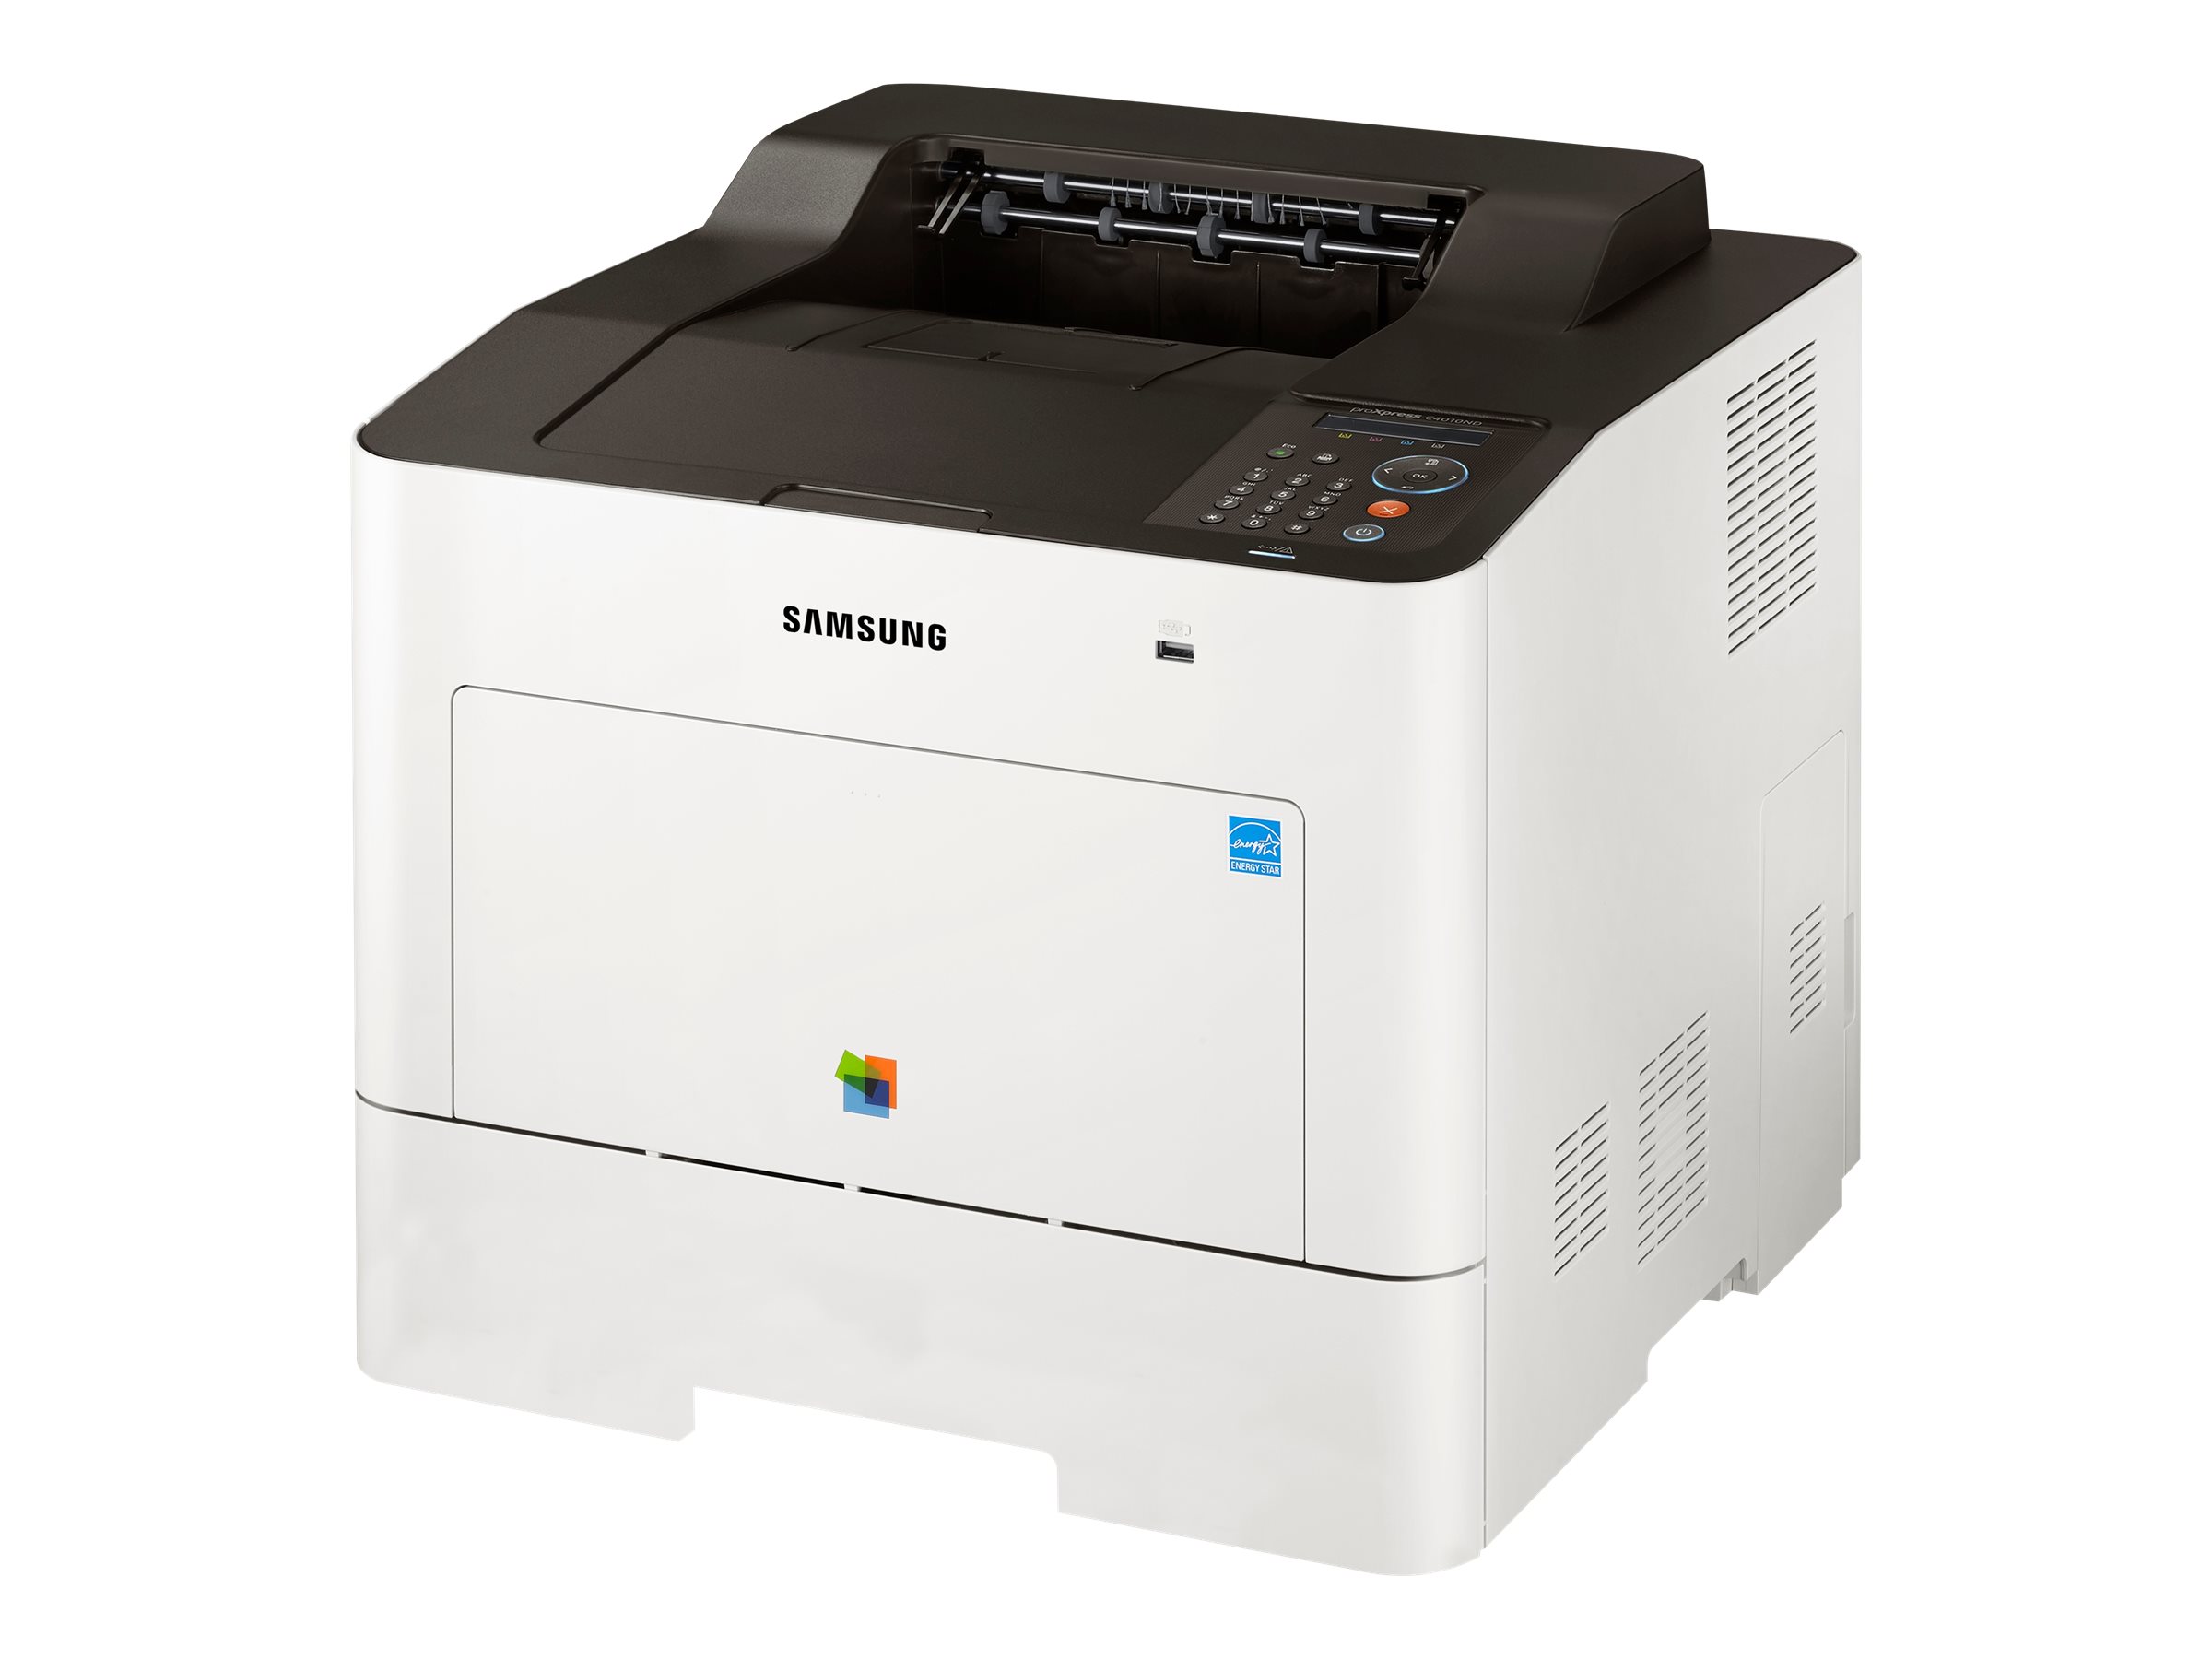 Samsung ProXpress SL-C4010 Color Laser Printer series